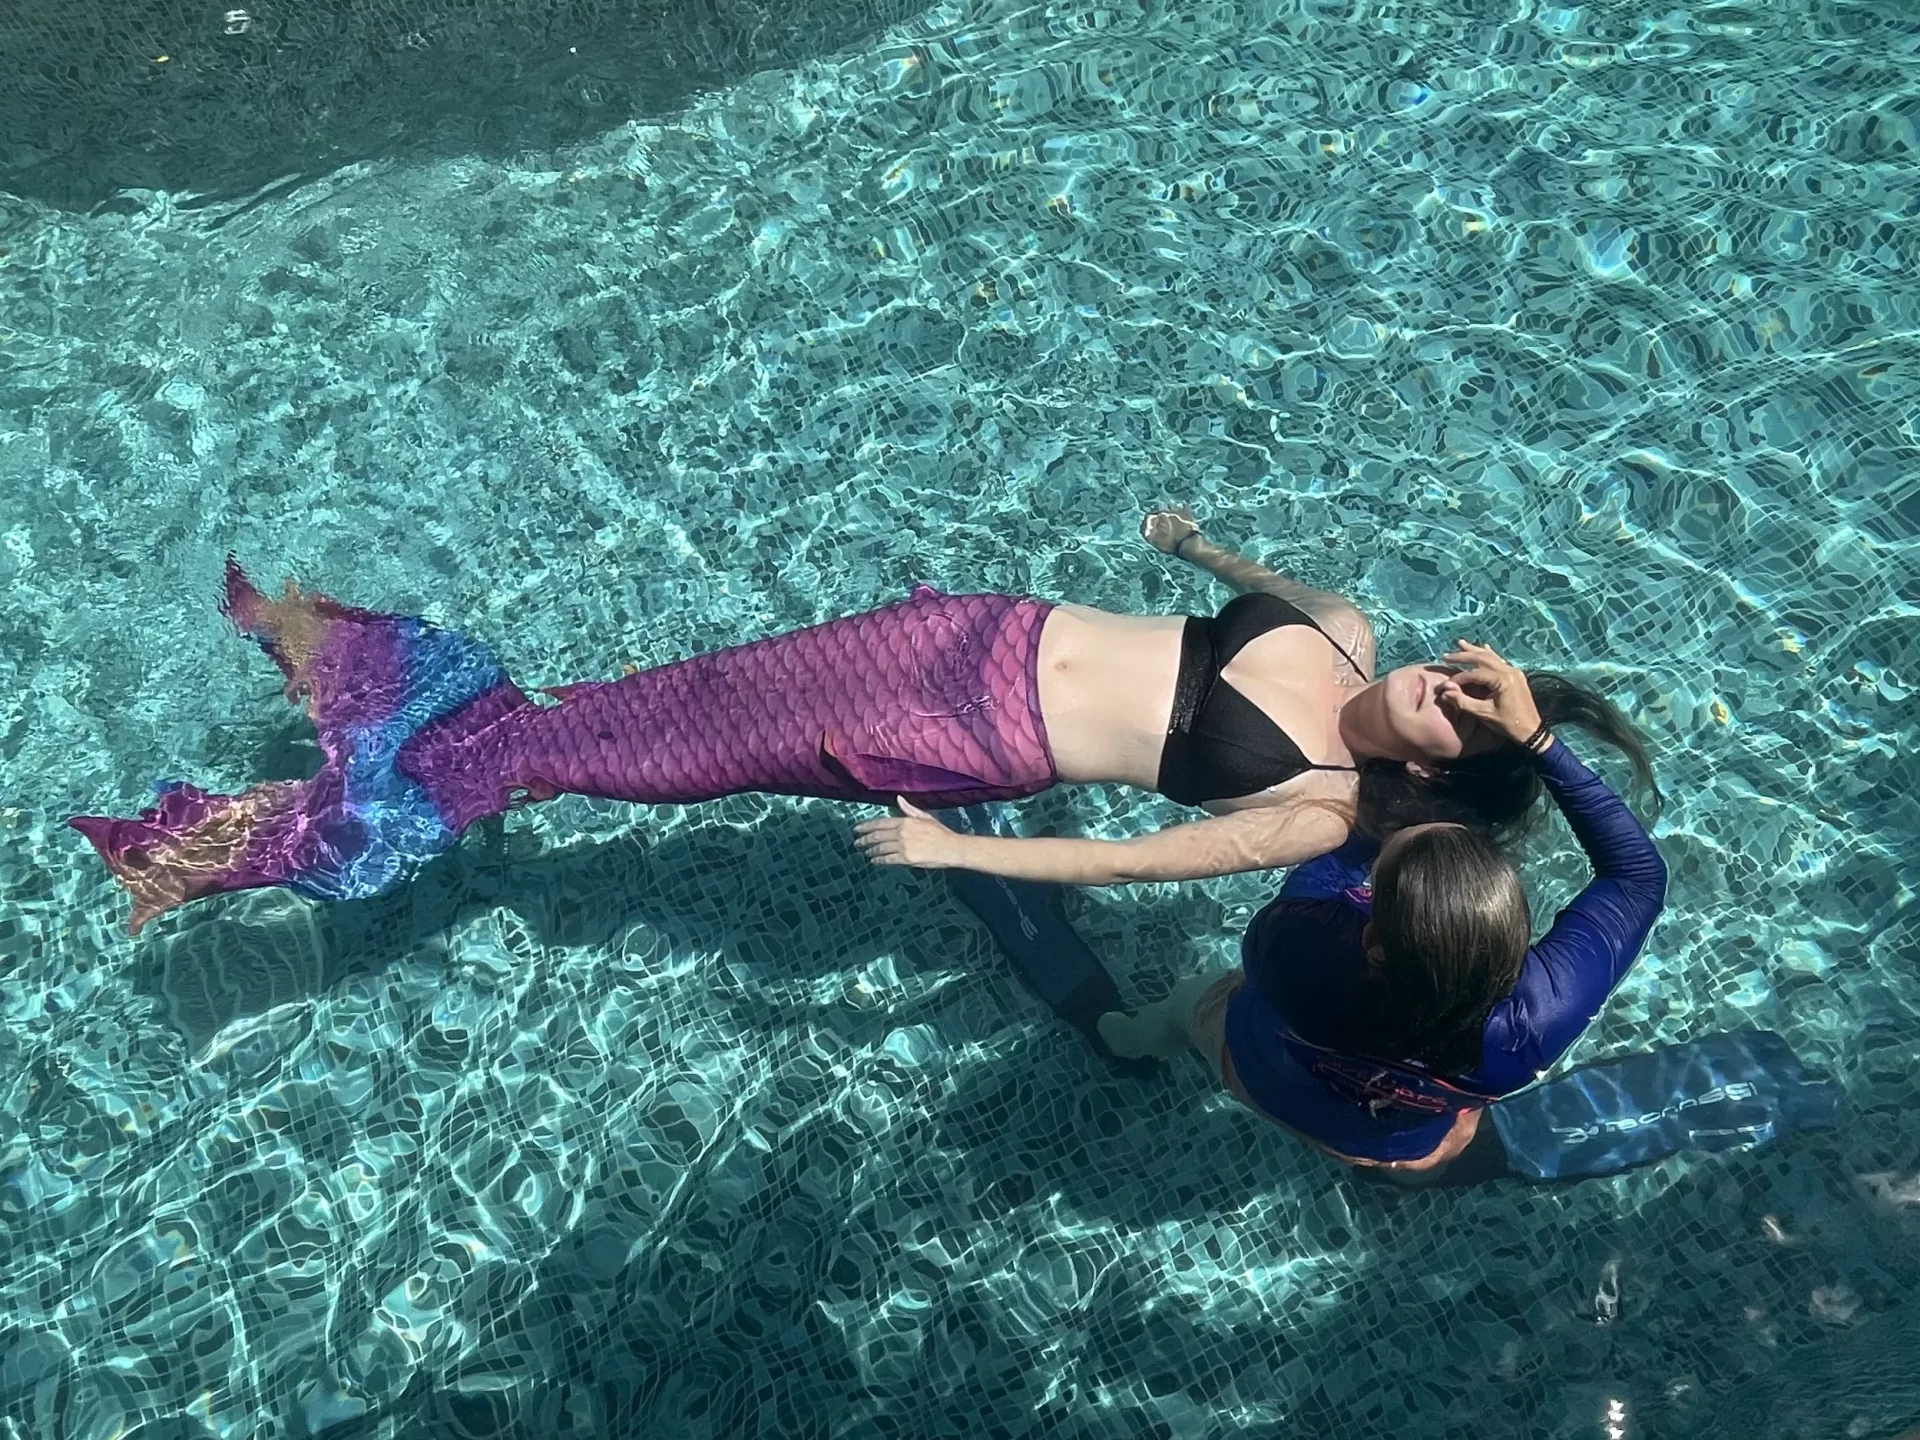 PADI Mermaid Instructor Course